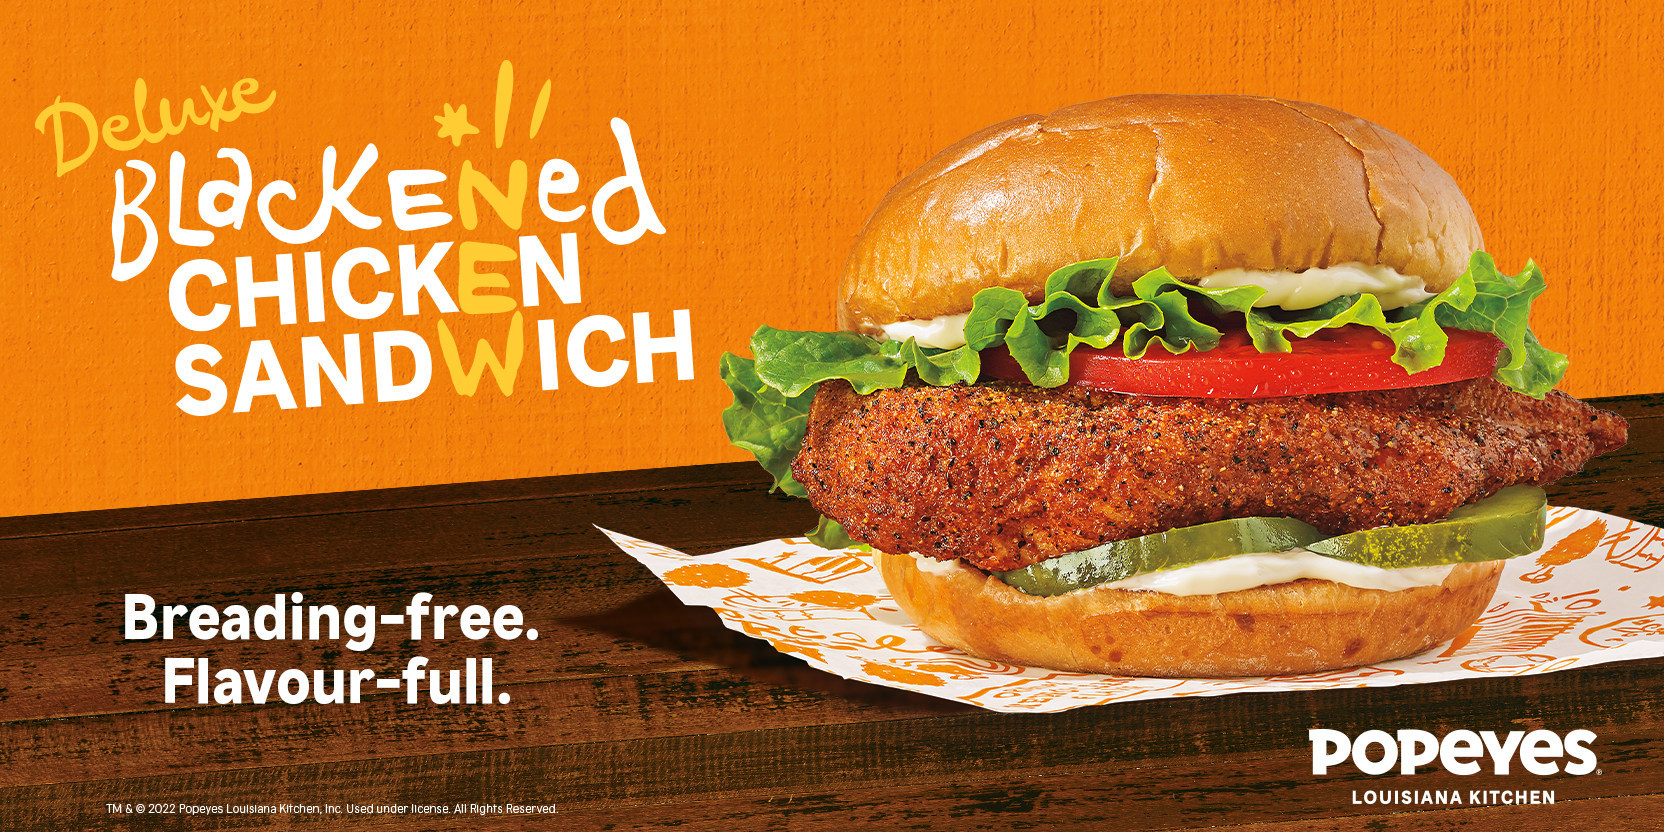 Popeyes Releases New Blackened Chicken Sandwich